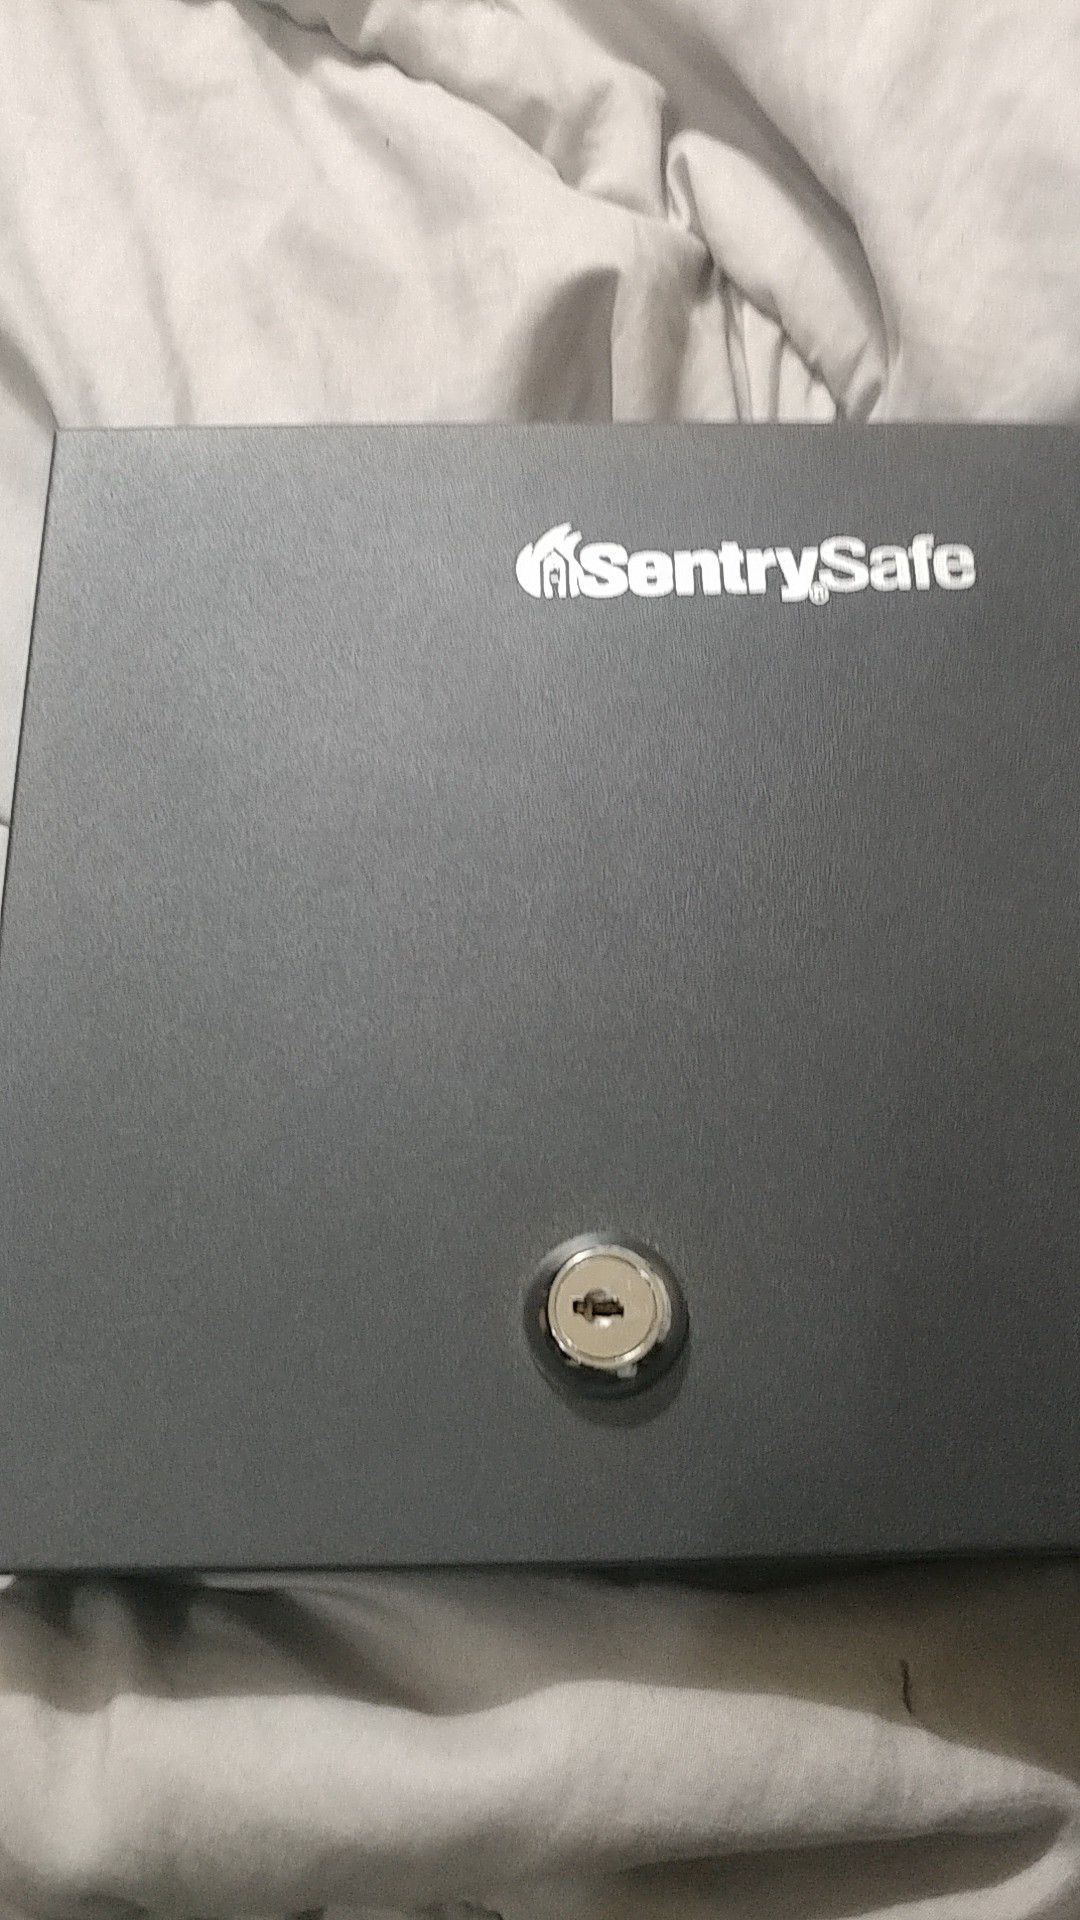 Small safe lockbox